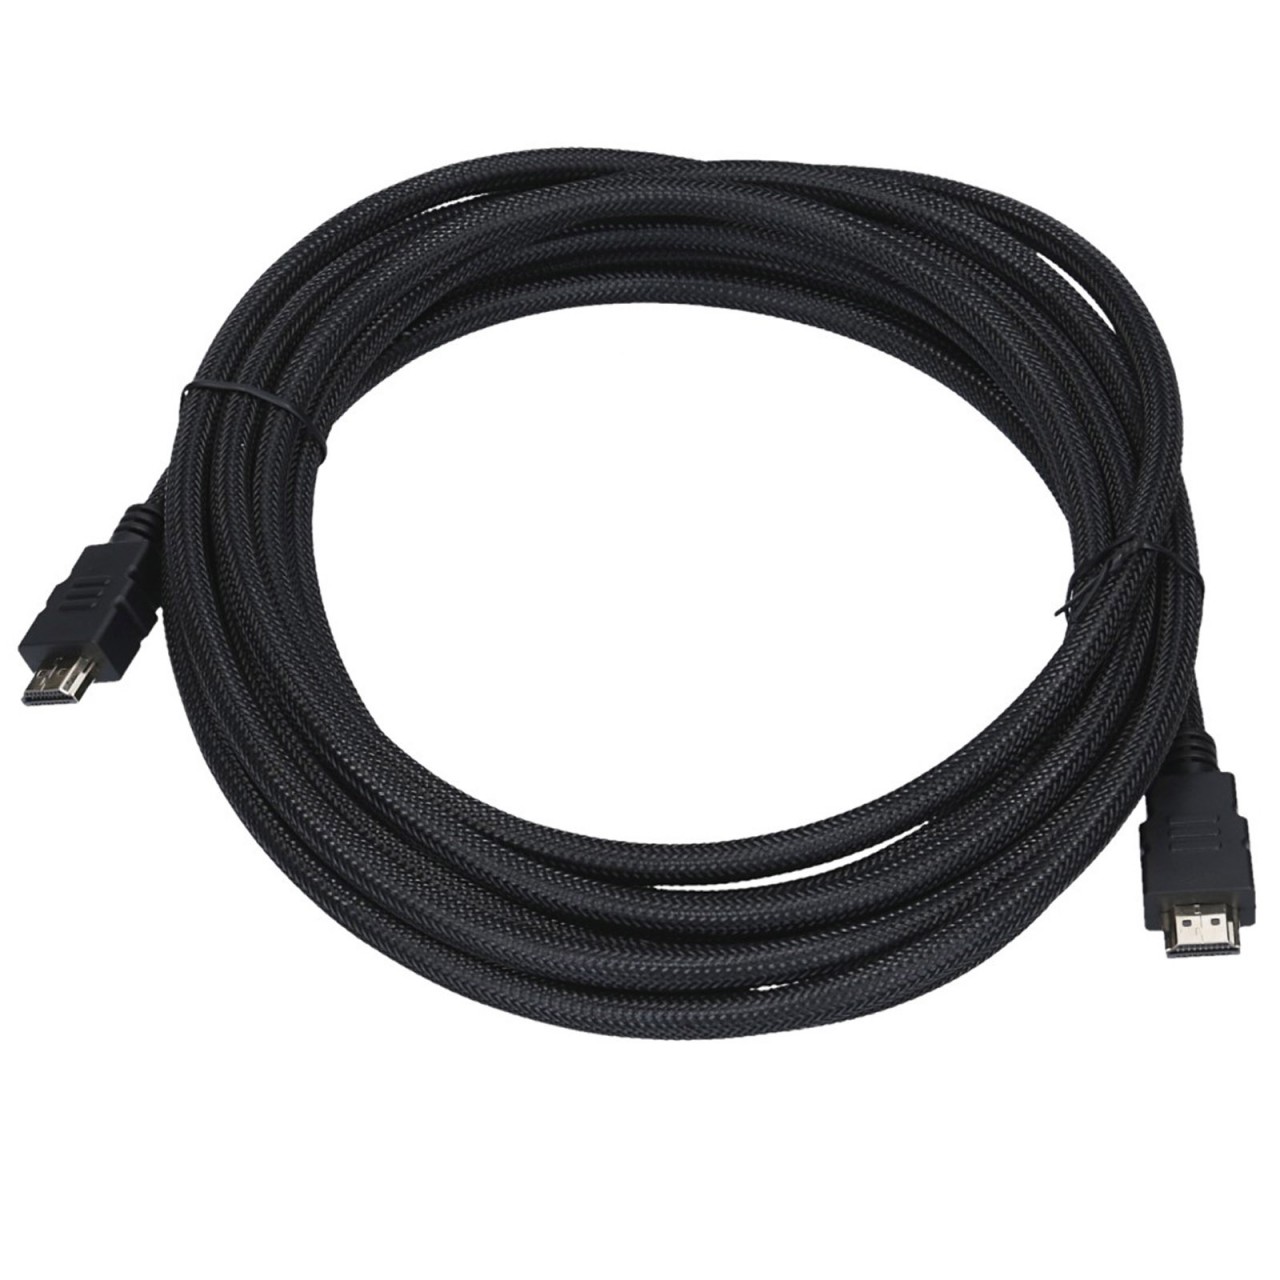 2 m HDMI Kabel High Speed mit Ethernet, HDMI 2.0 4K